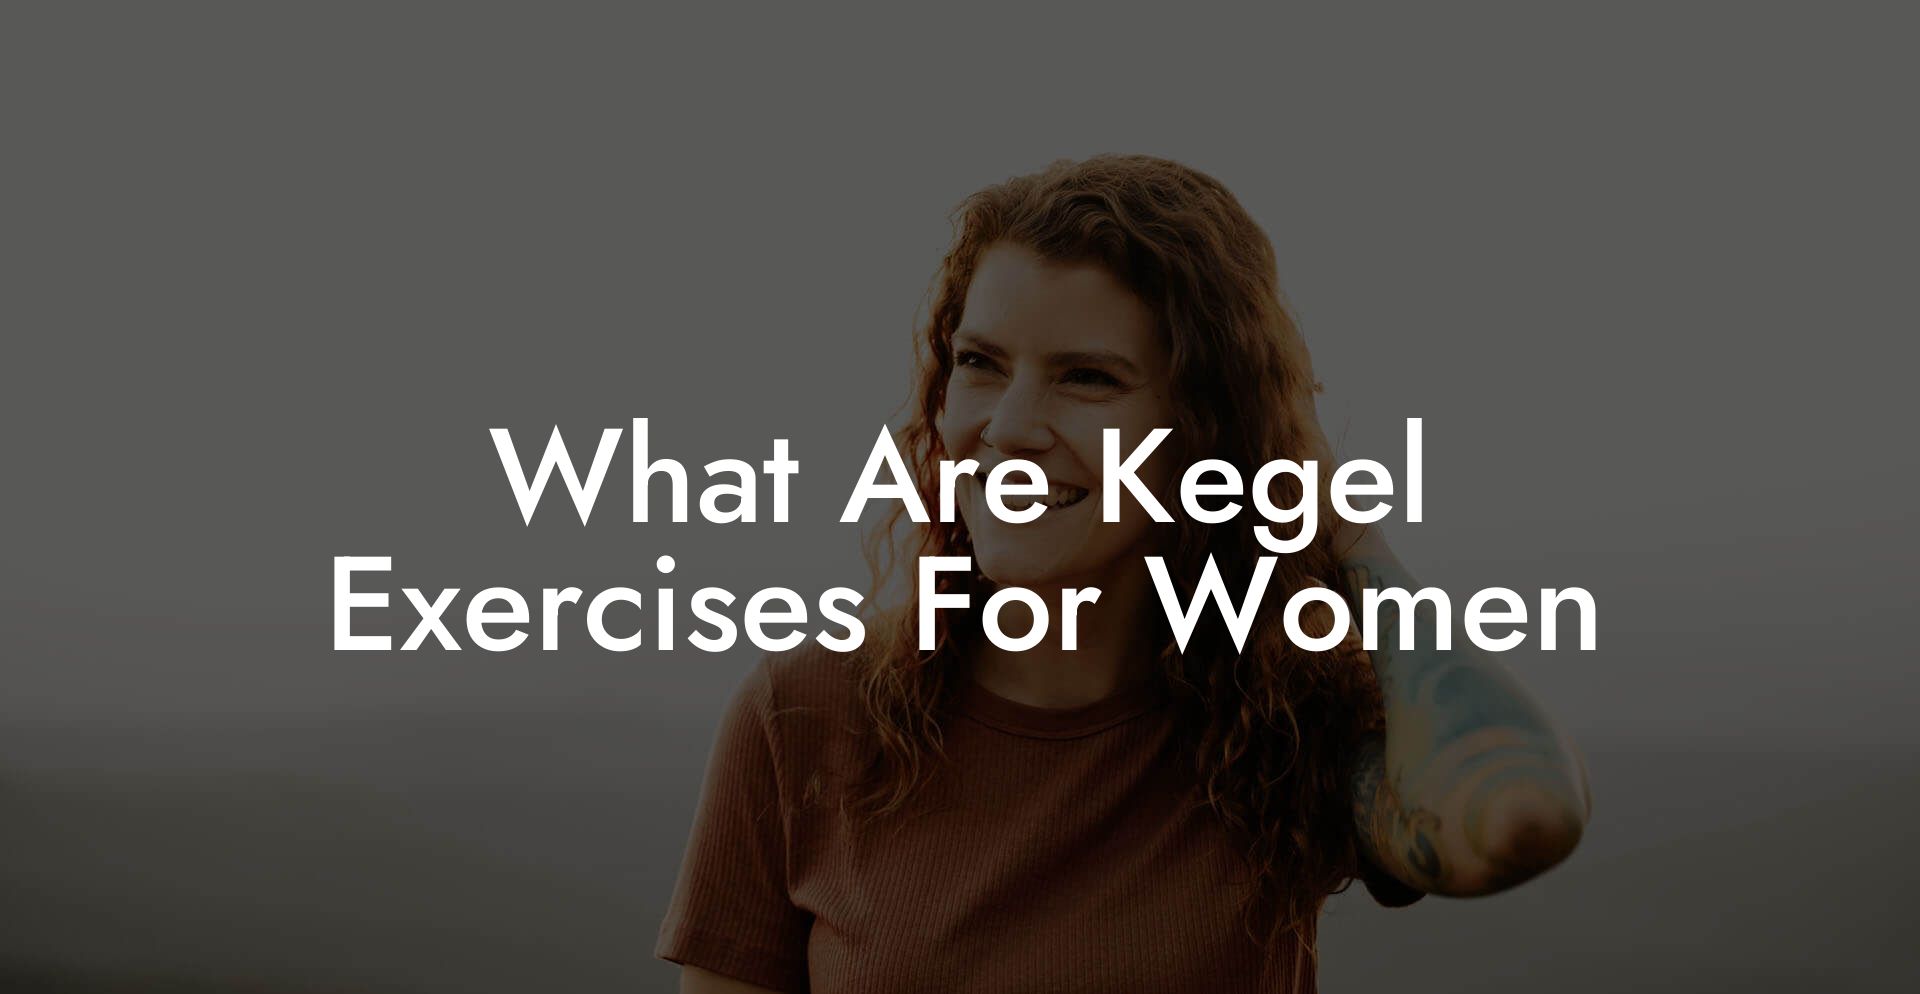 What Are Kegel Exercises For Women